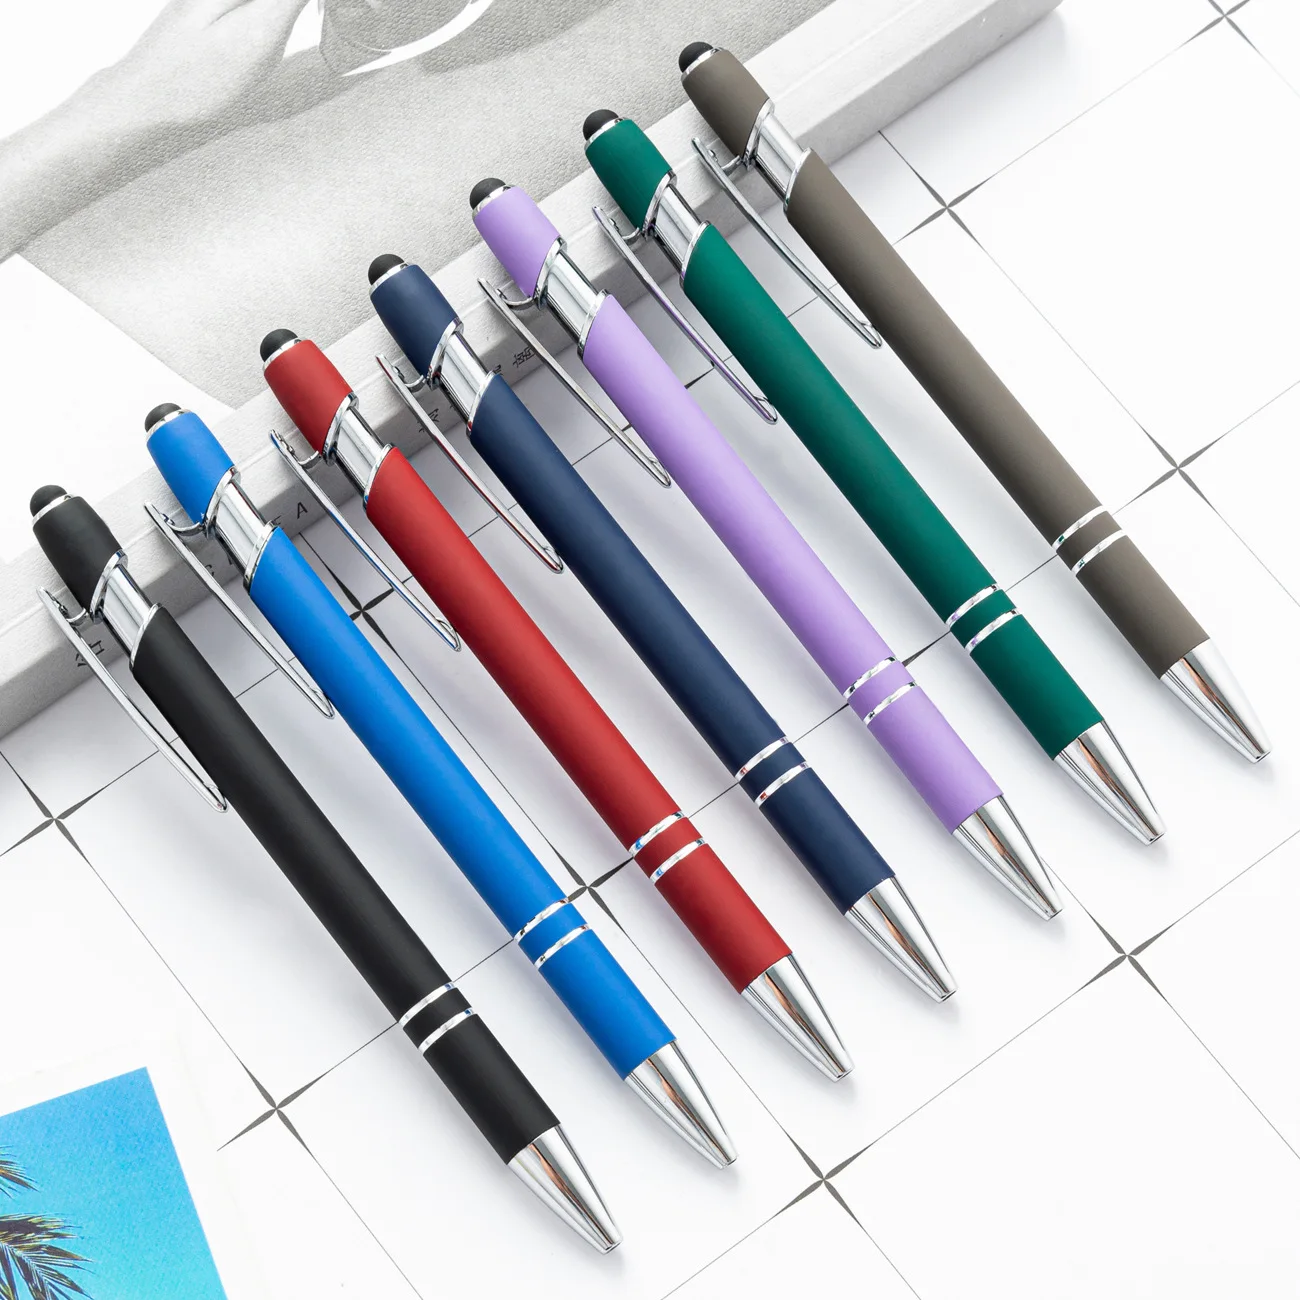 

Aluminum Capacitive Touch Ballpoint Pen Handwriting Touch Screen Pen Gift Multicolor Ballpoint Pen School Student Metal Push Pen